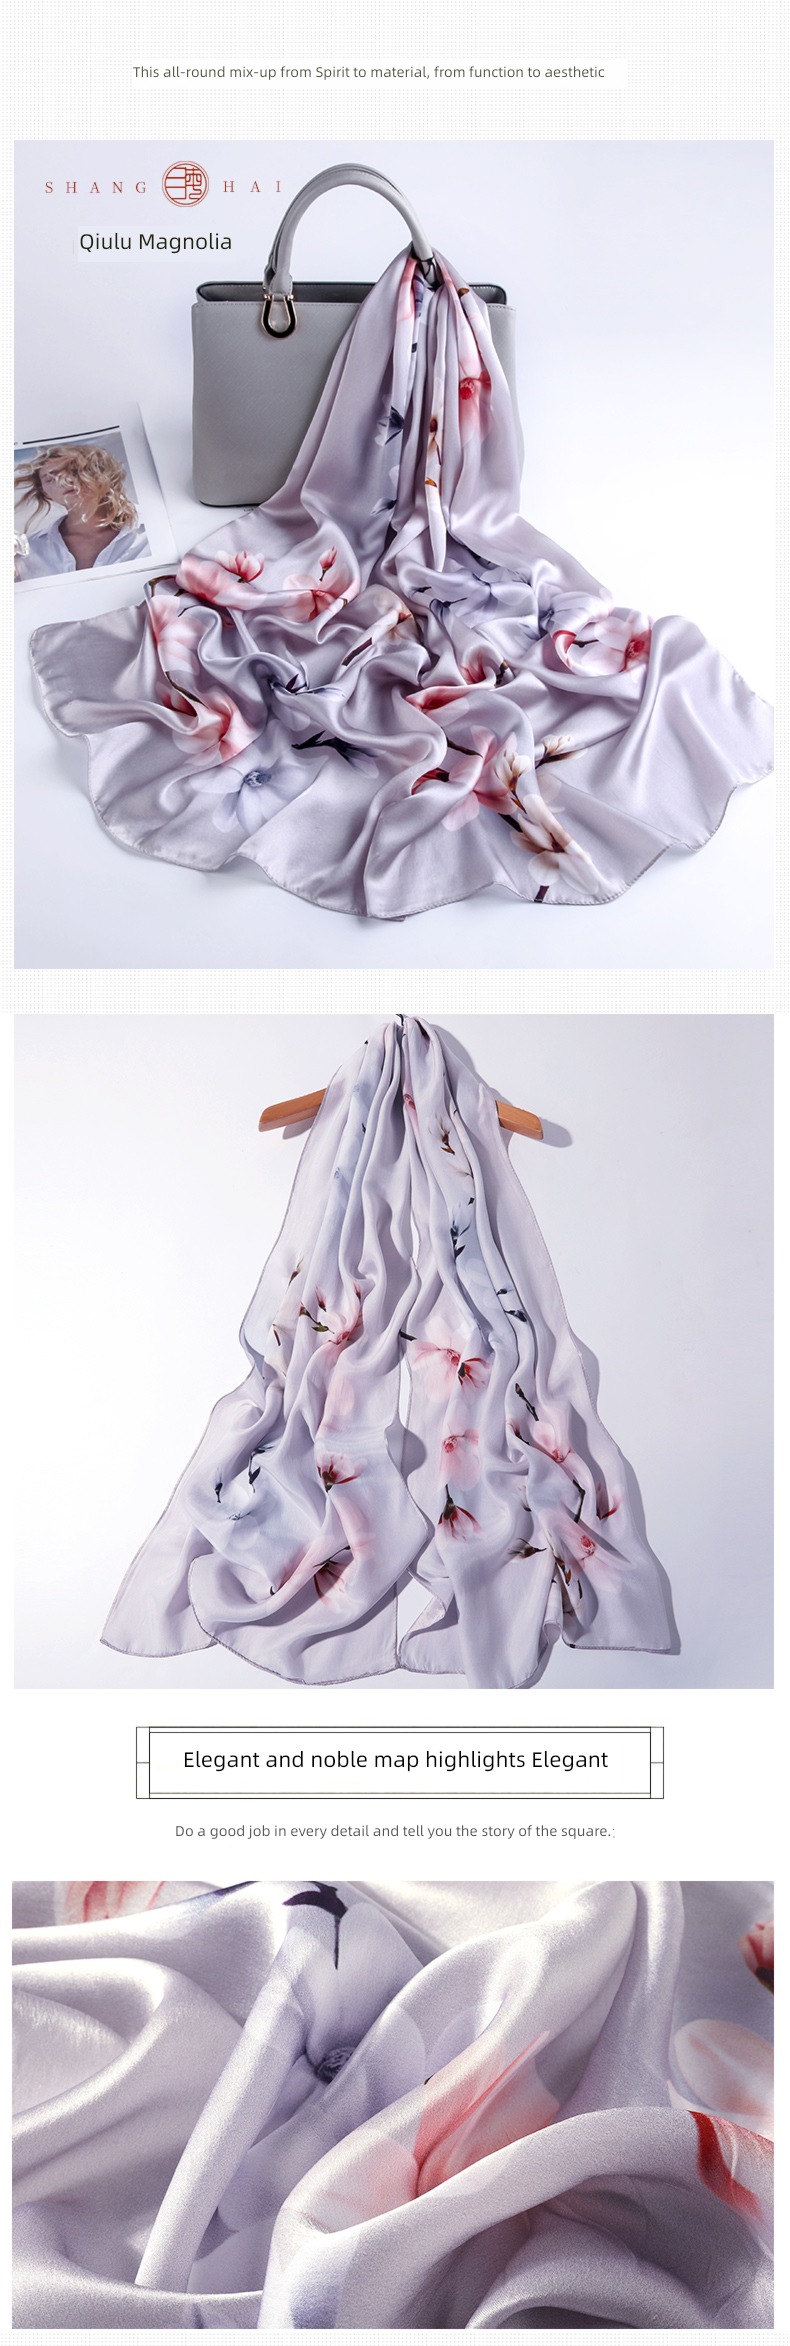 Shanghai Story female Gift box To Mom high-grade Silk scarf